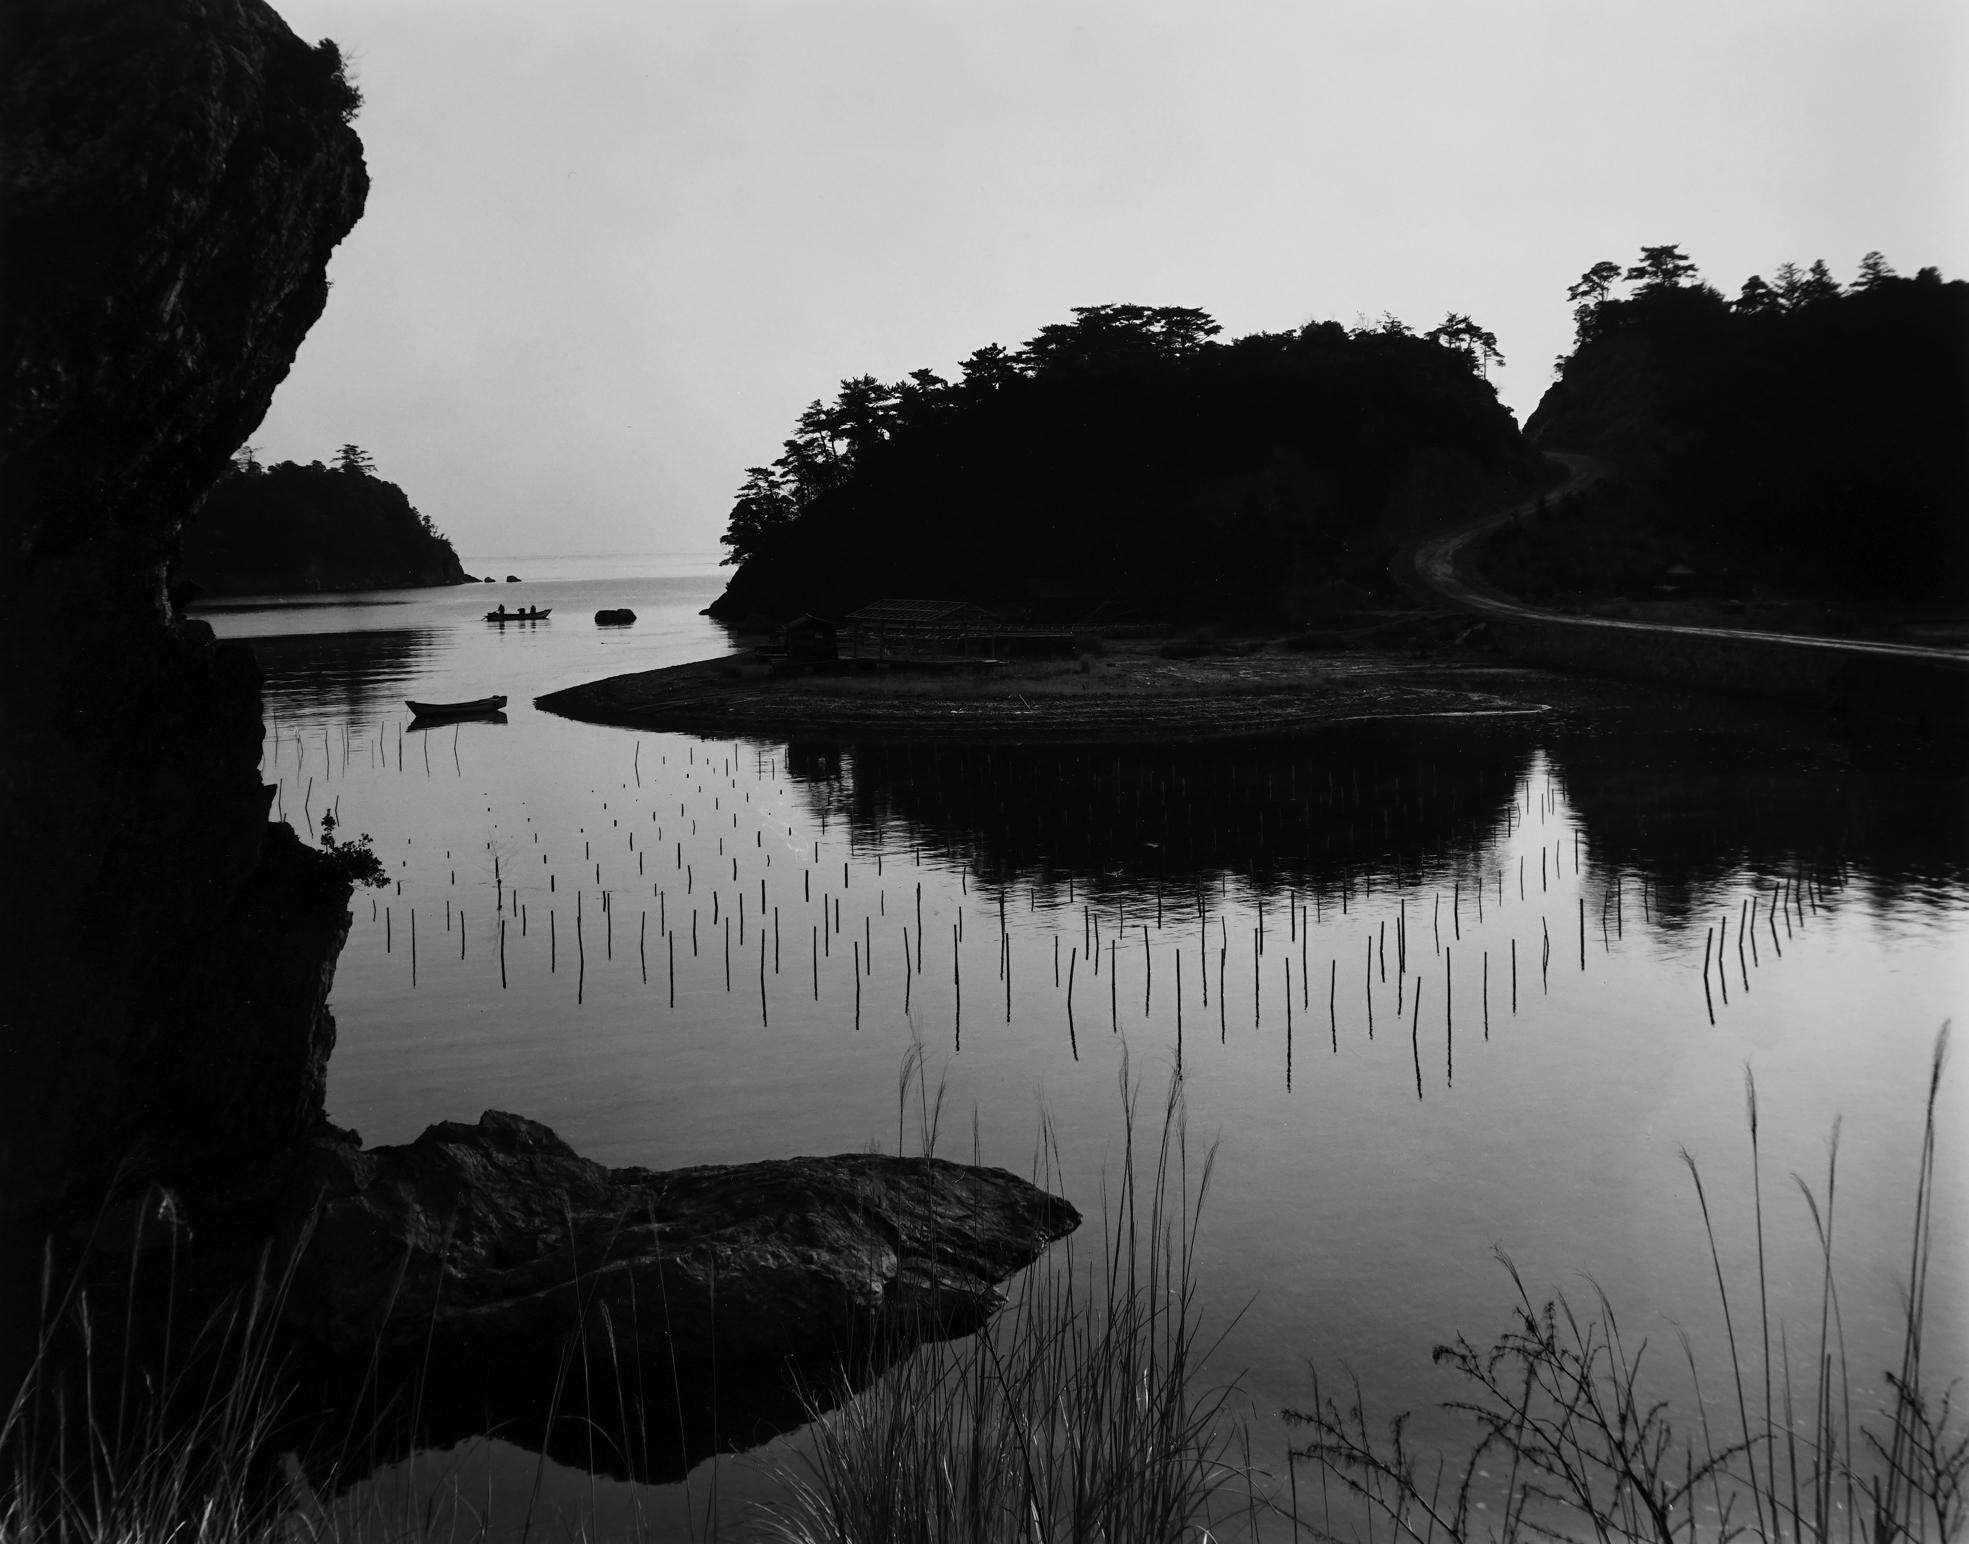 Brett Weston Black and White Photograph - Inlet, Japan, 1970 (Vintage)